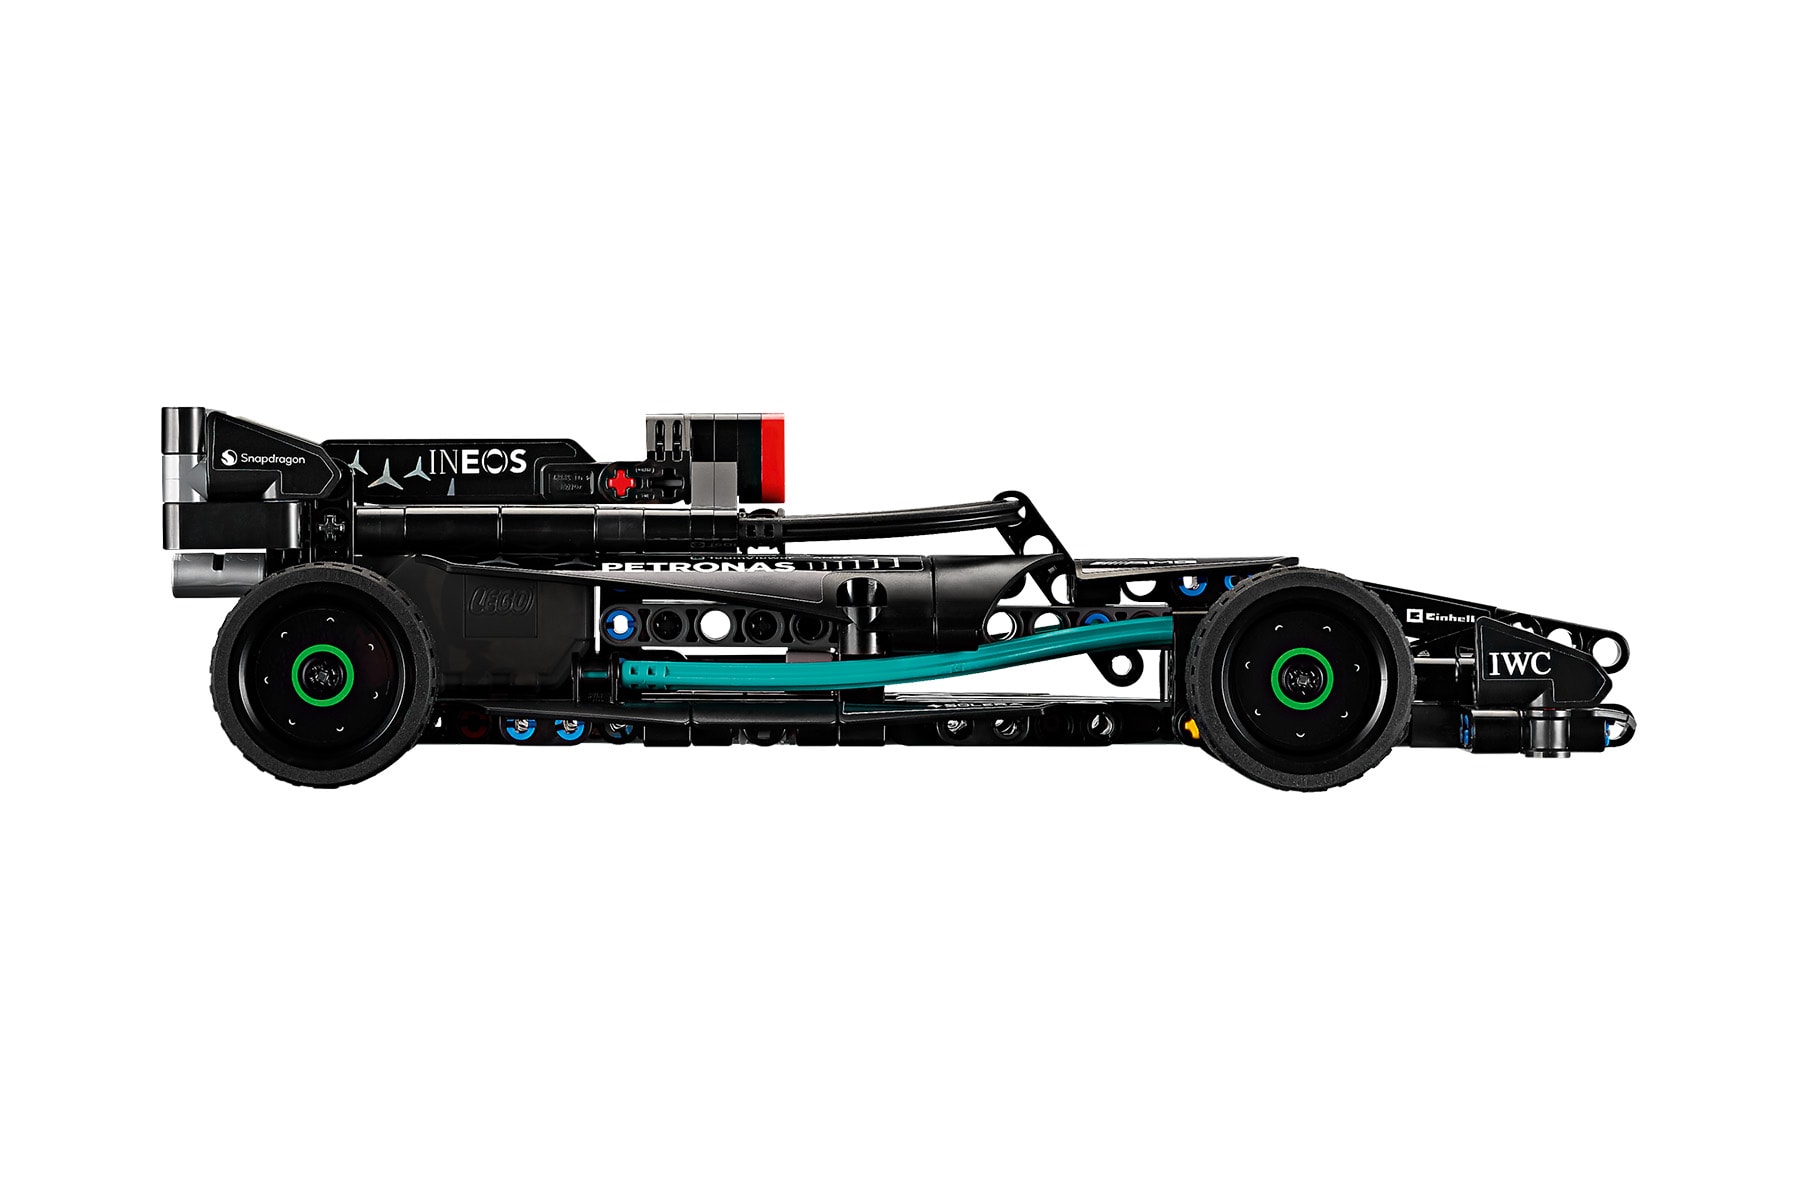 LEGO Technic 推出全新 1:8 尺寸 Mercedes-AMG F1 賽車積木模型